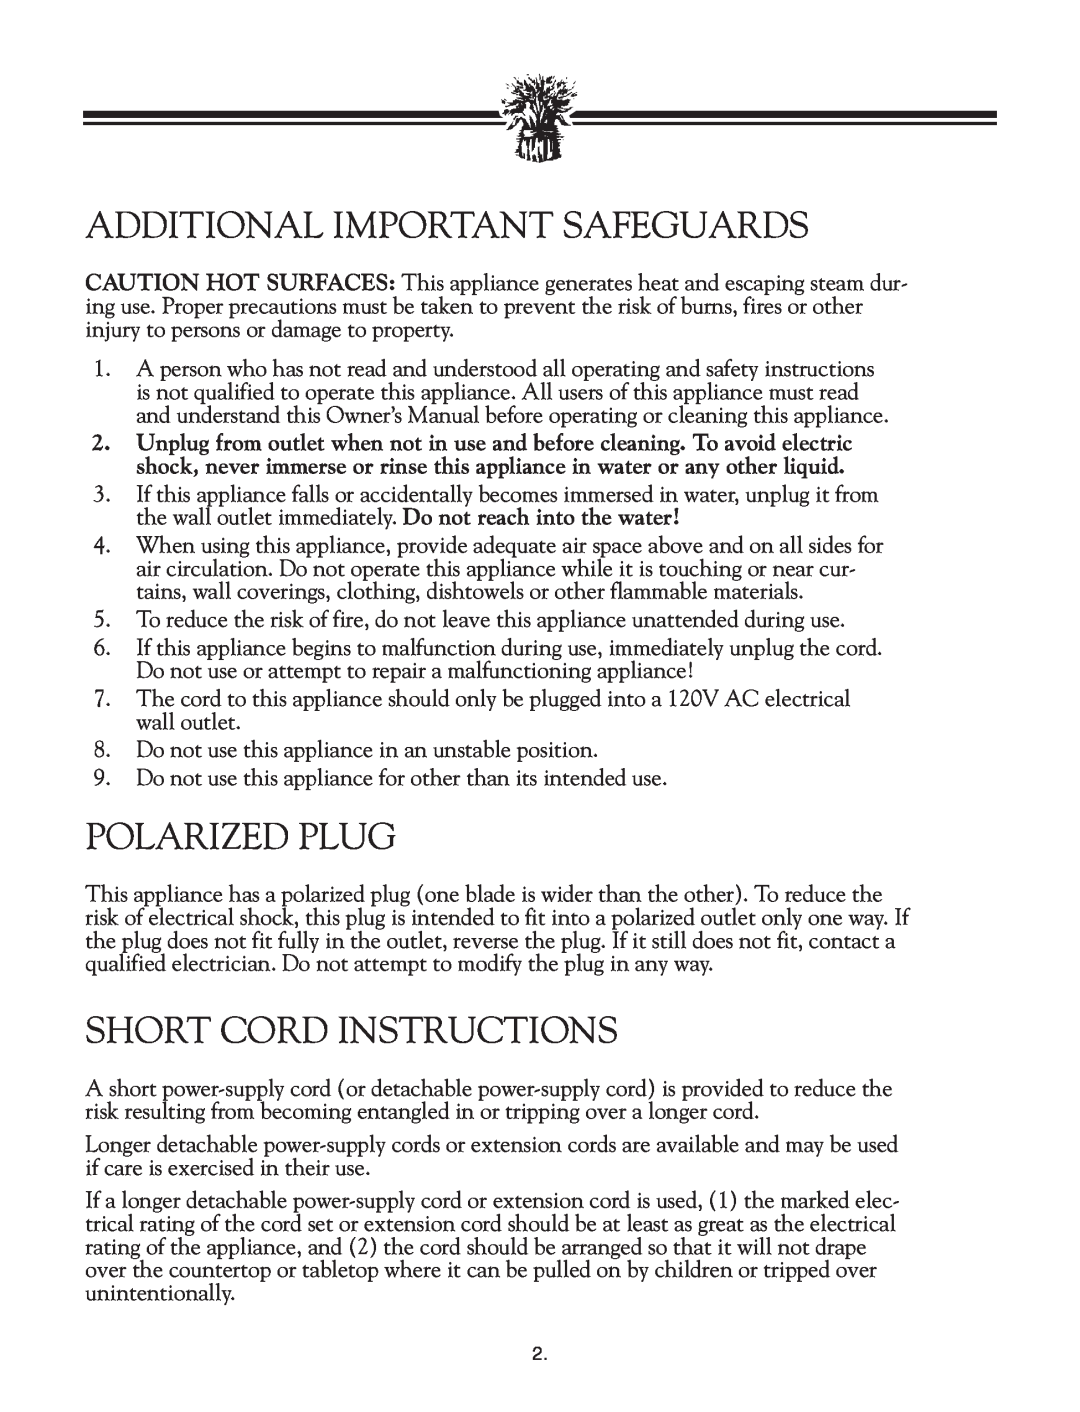 Breadman TR2828G instruction manual Additional Important Safeguards, Polarized Plug, Short Cord Instructions 